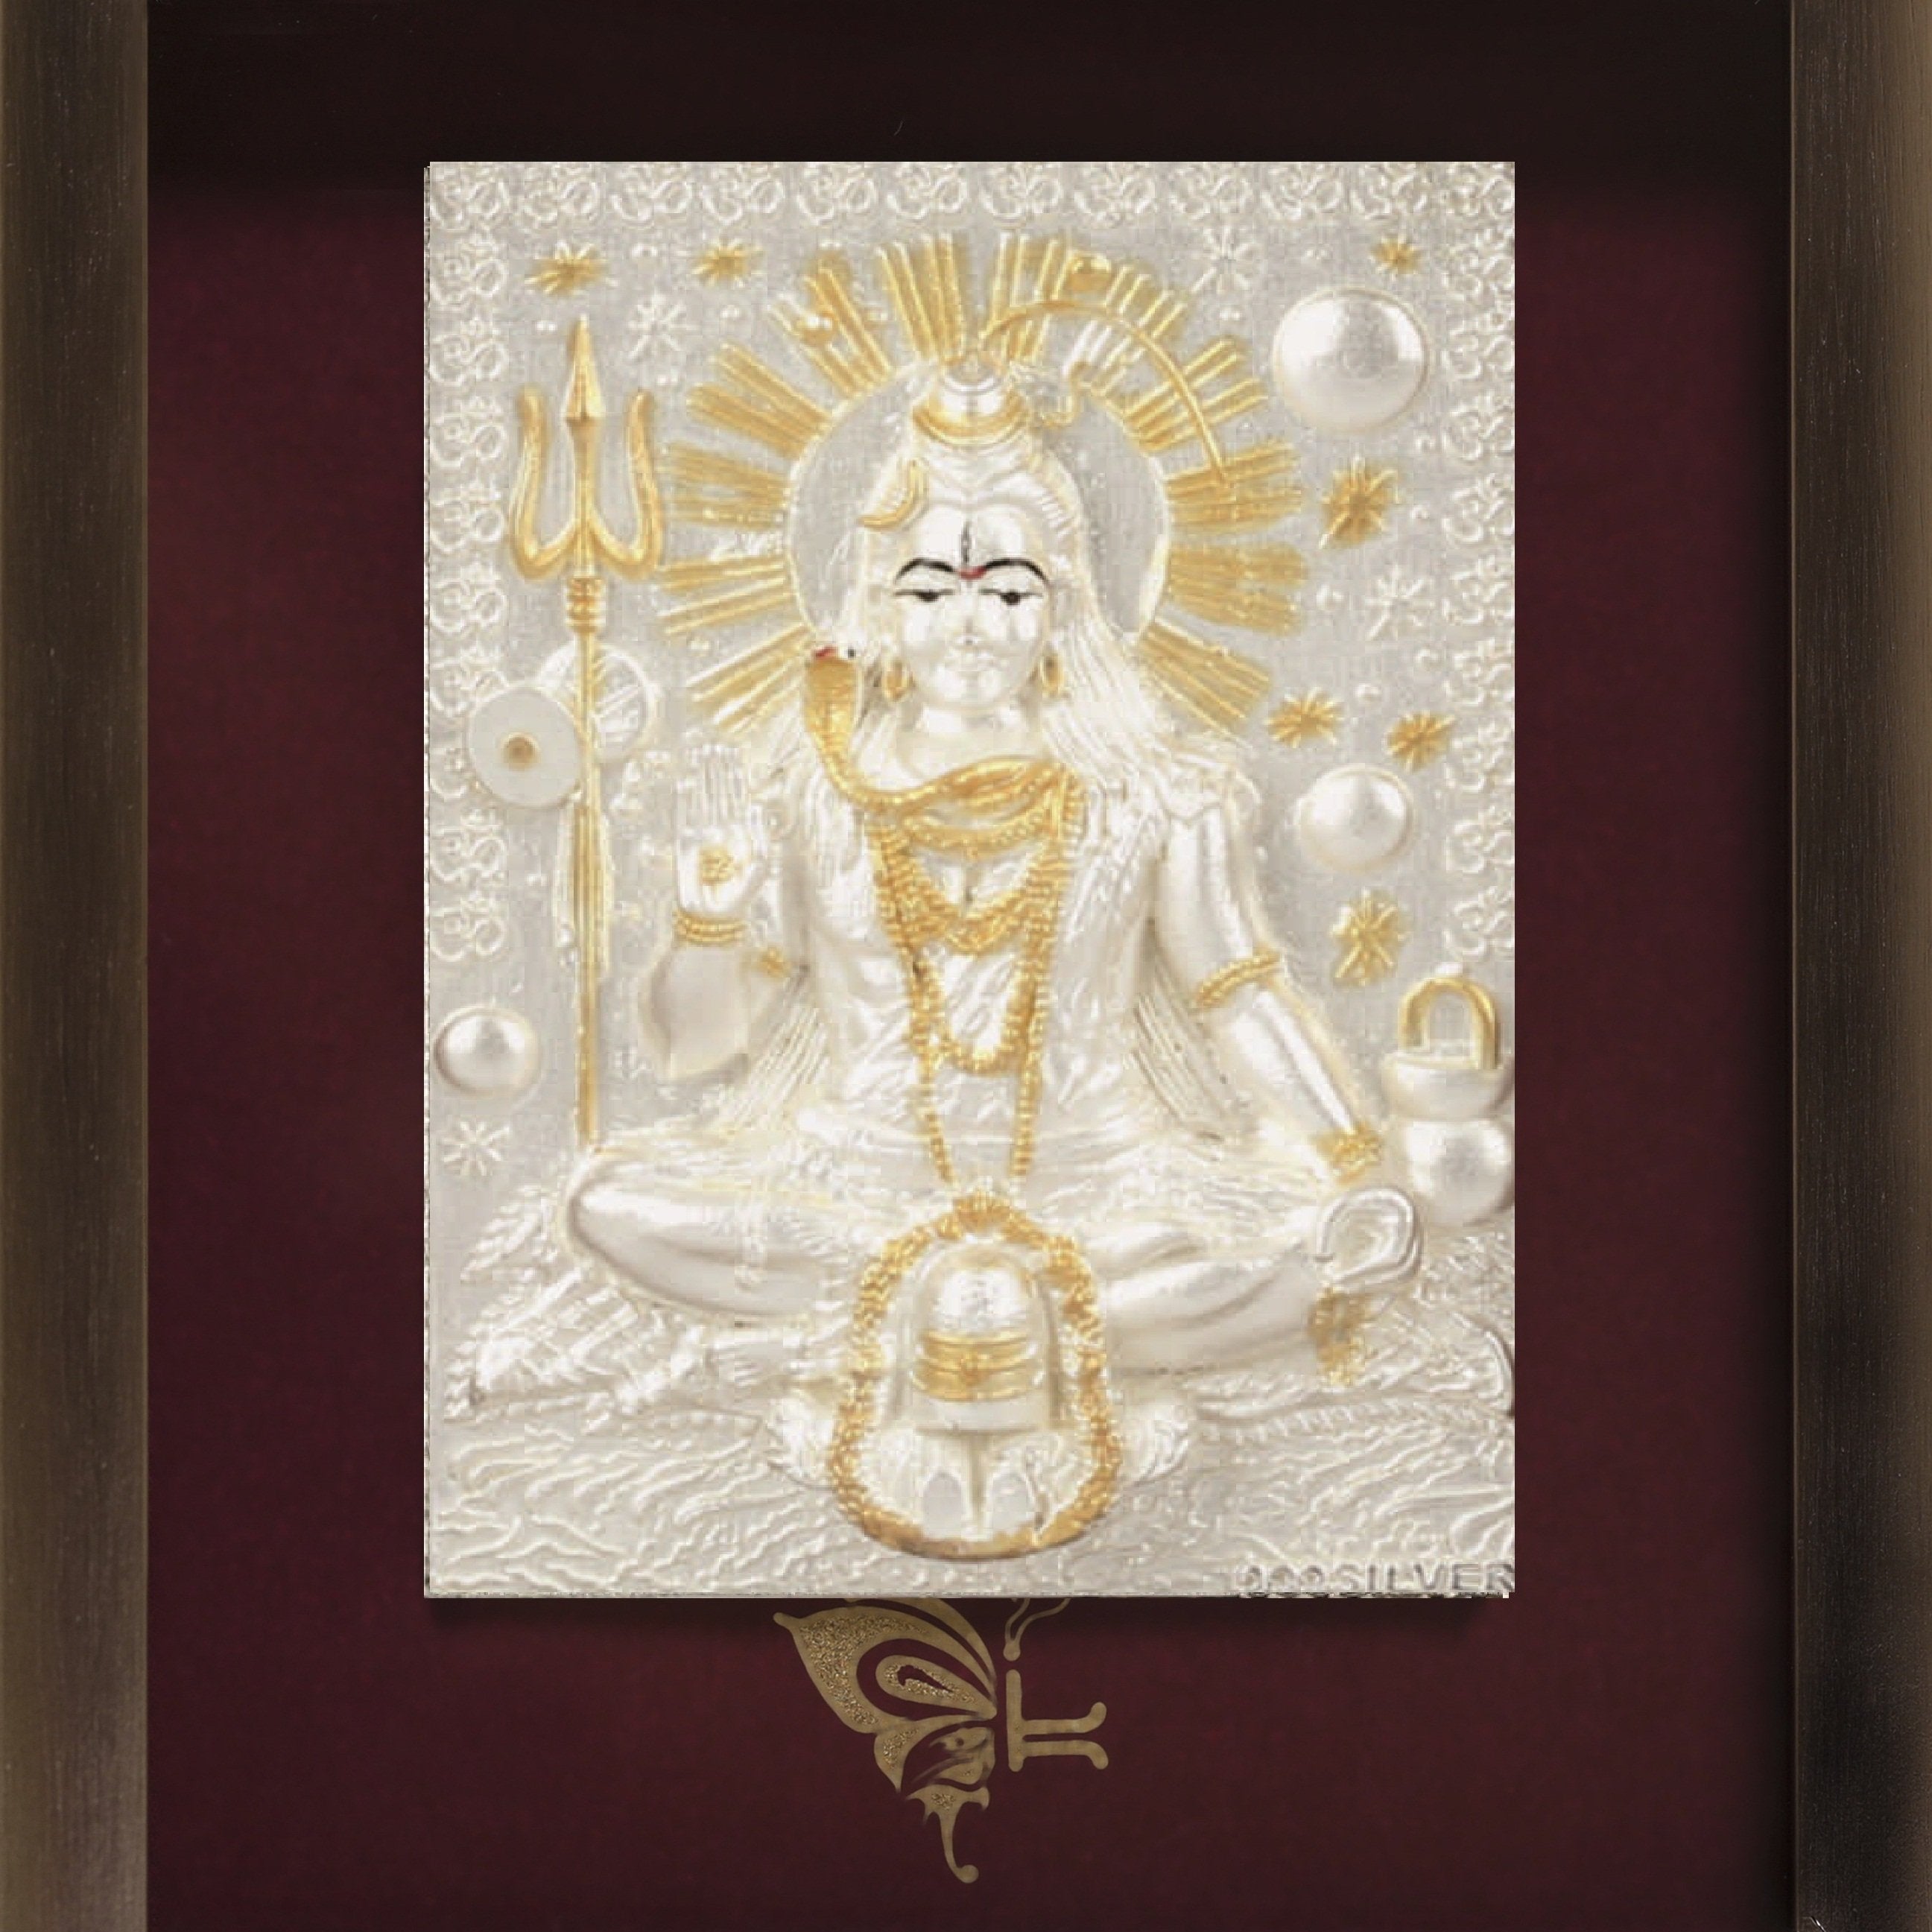 Pure Silver God Photo Frame of Lord Shiva by Krysaliis Isvara